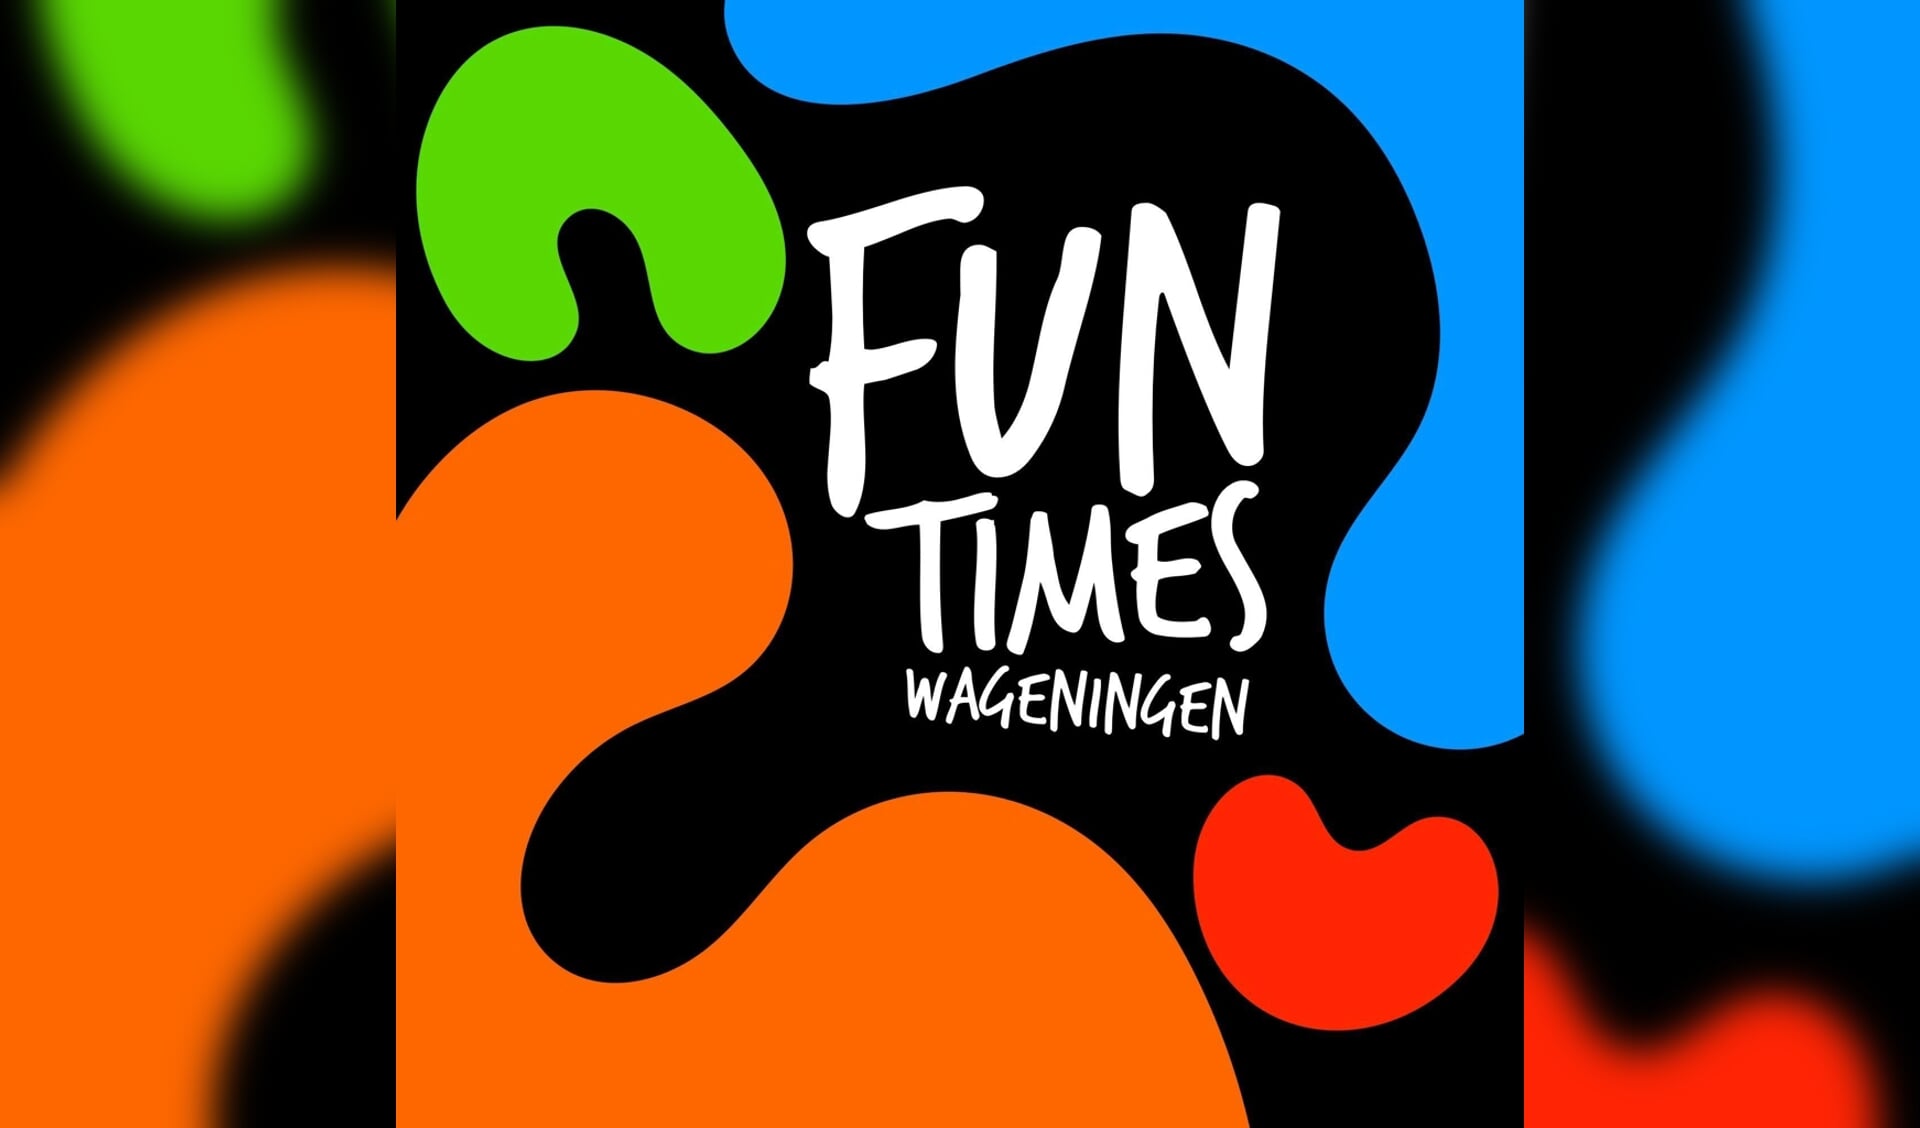 Find us on www.funtimeswageningen.com or follow us on our socials #funtimeswageningen 